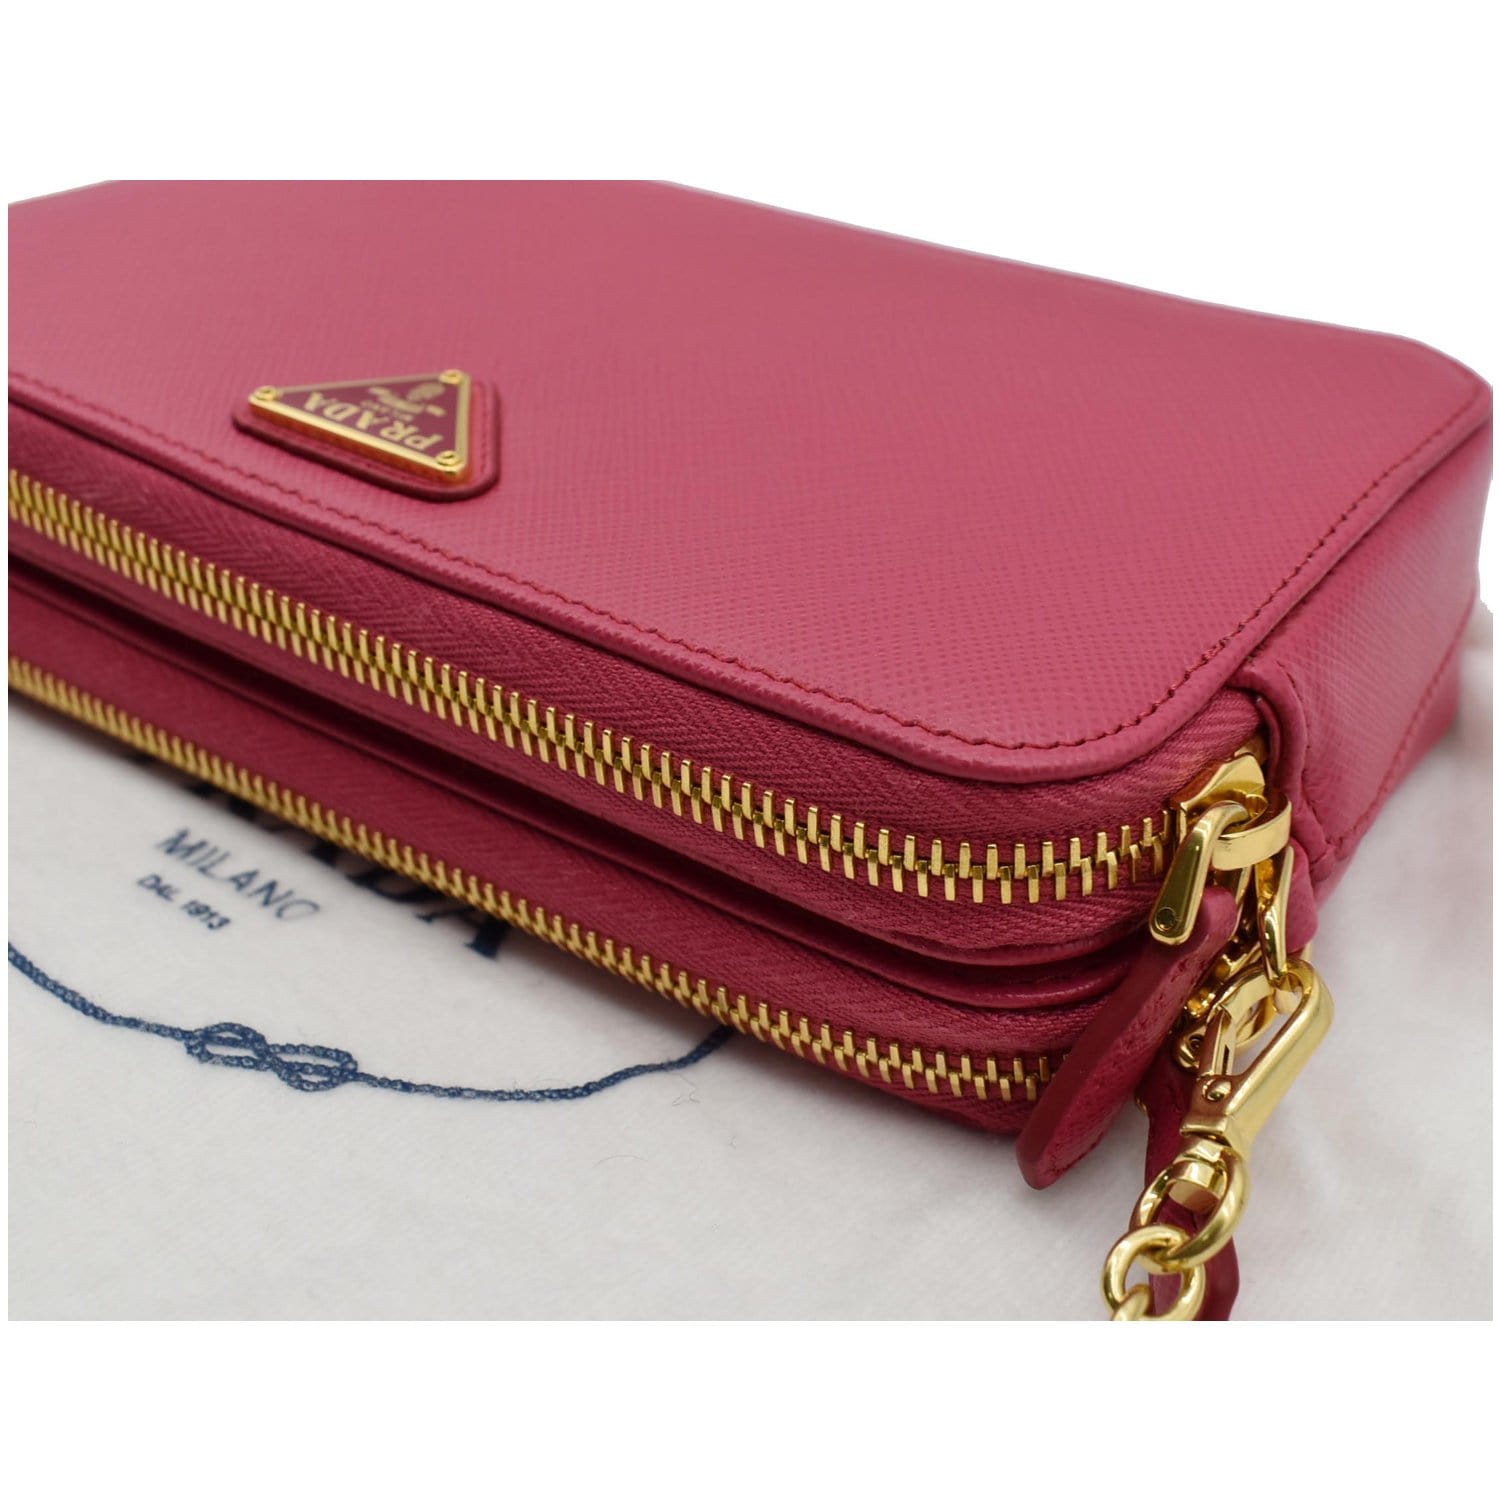 Prada Saffiano Leather Mini Bag Women Powder Pink